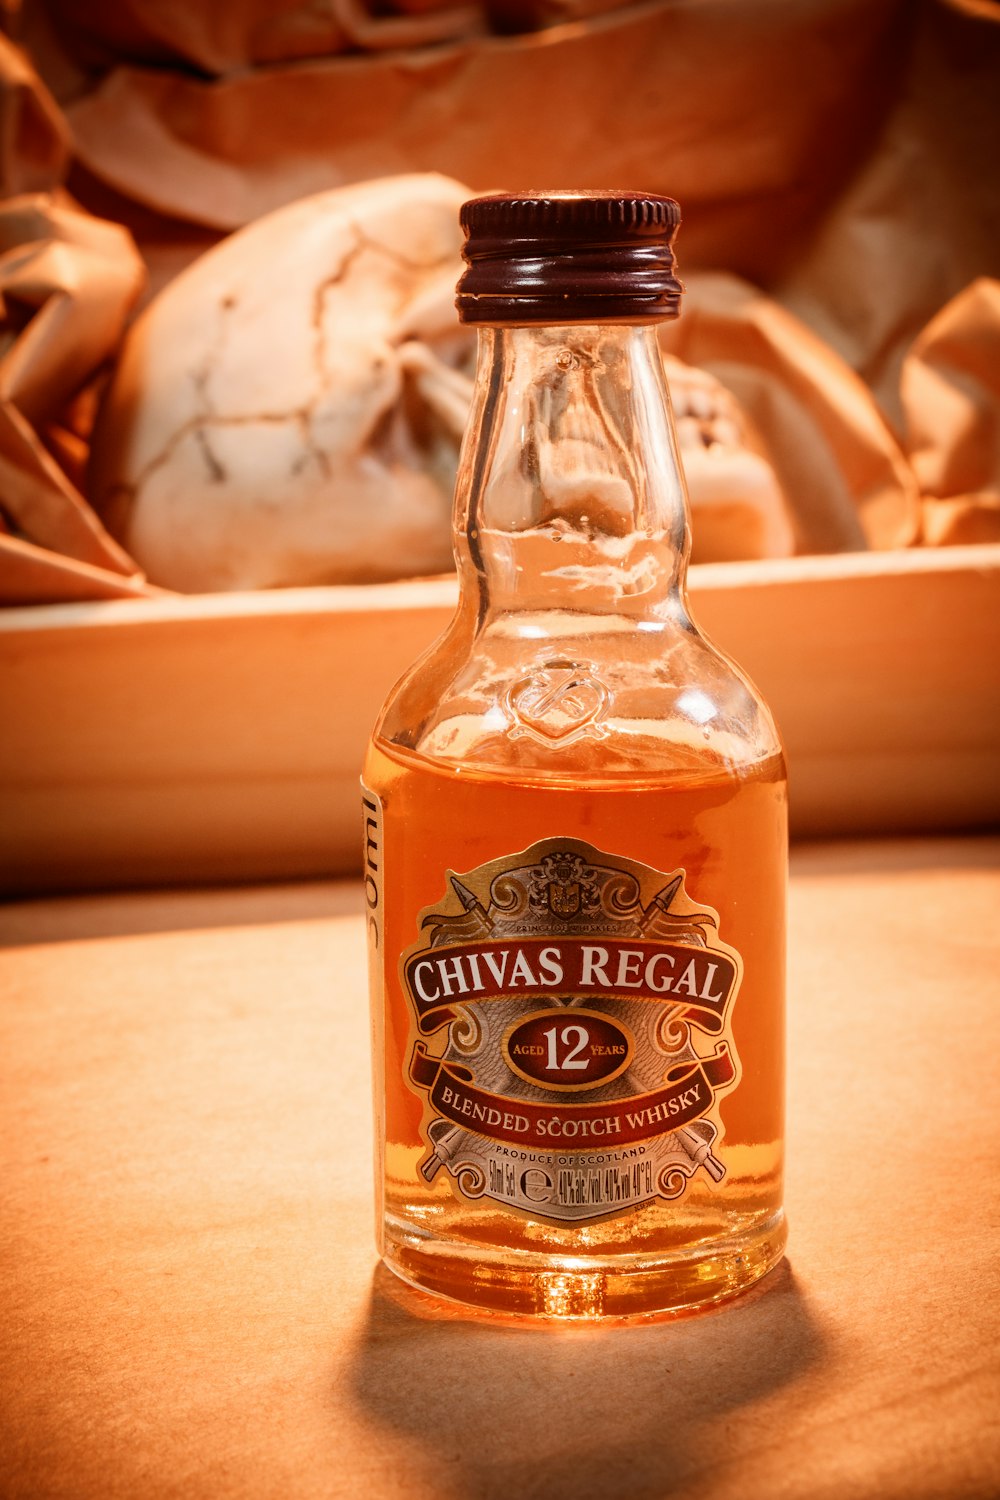 a bottle of chivas regal 12 year old